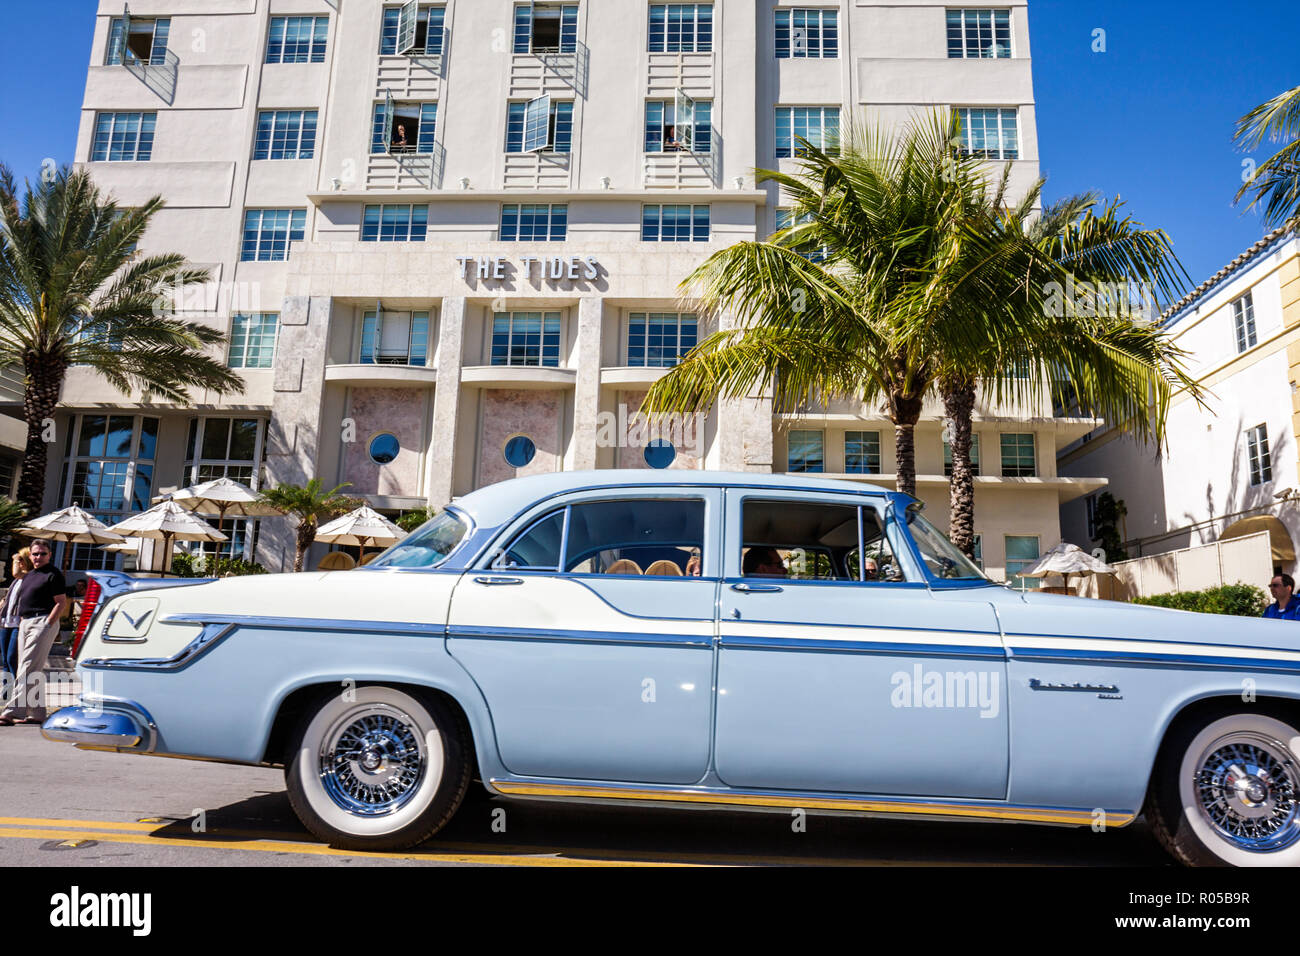 Miami Beach Florida,Ocean Drive,Art Deco Weekend,architecture festival parade,crowd,classic car,vintage,entertainment,palm tree,The Tides,hotel,L. Mur Stock Photo